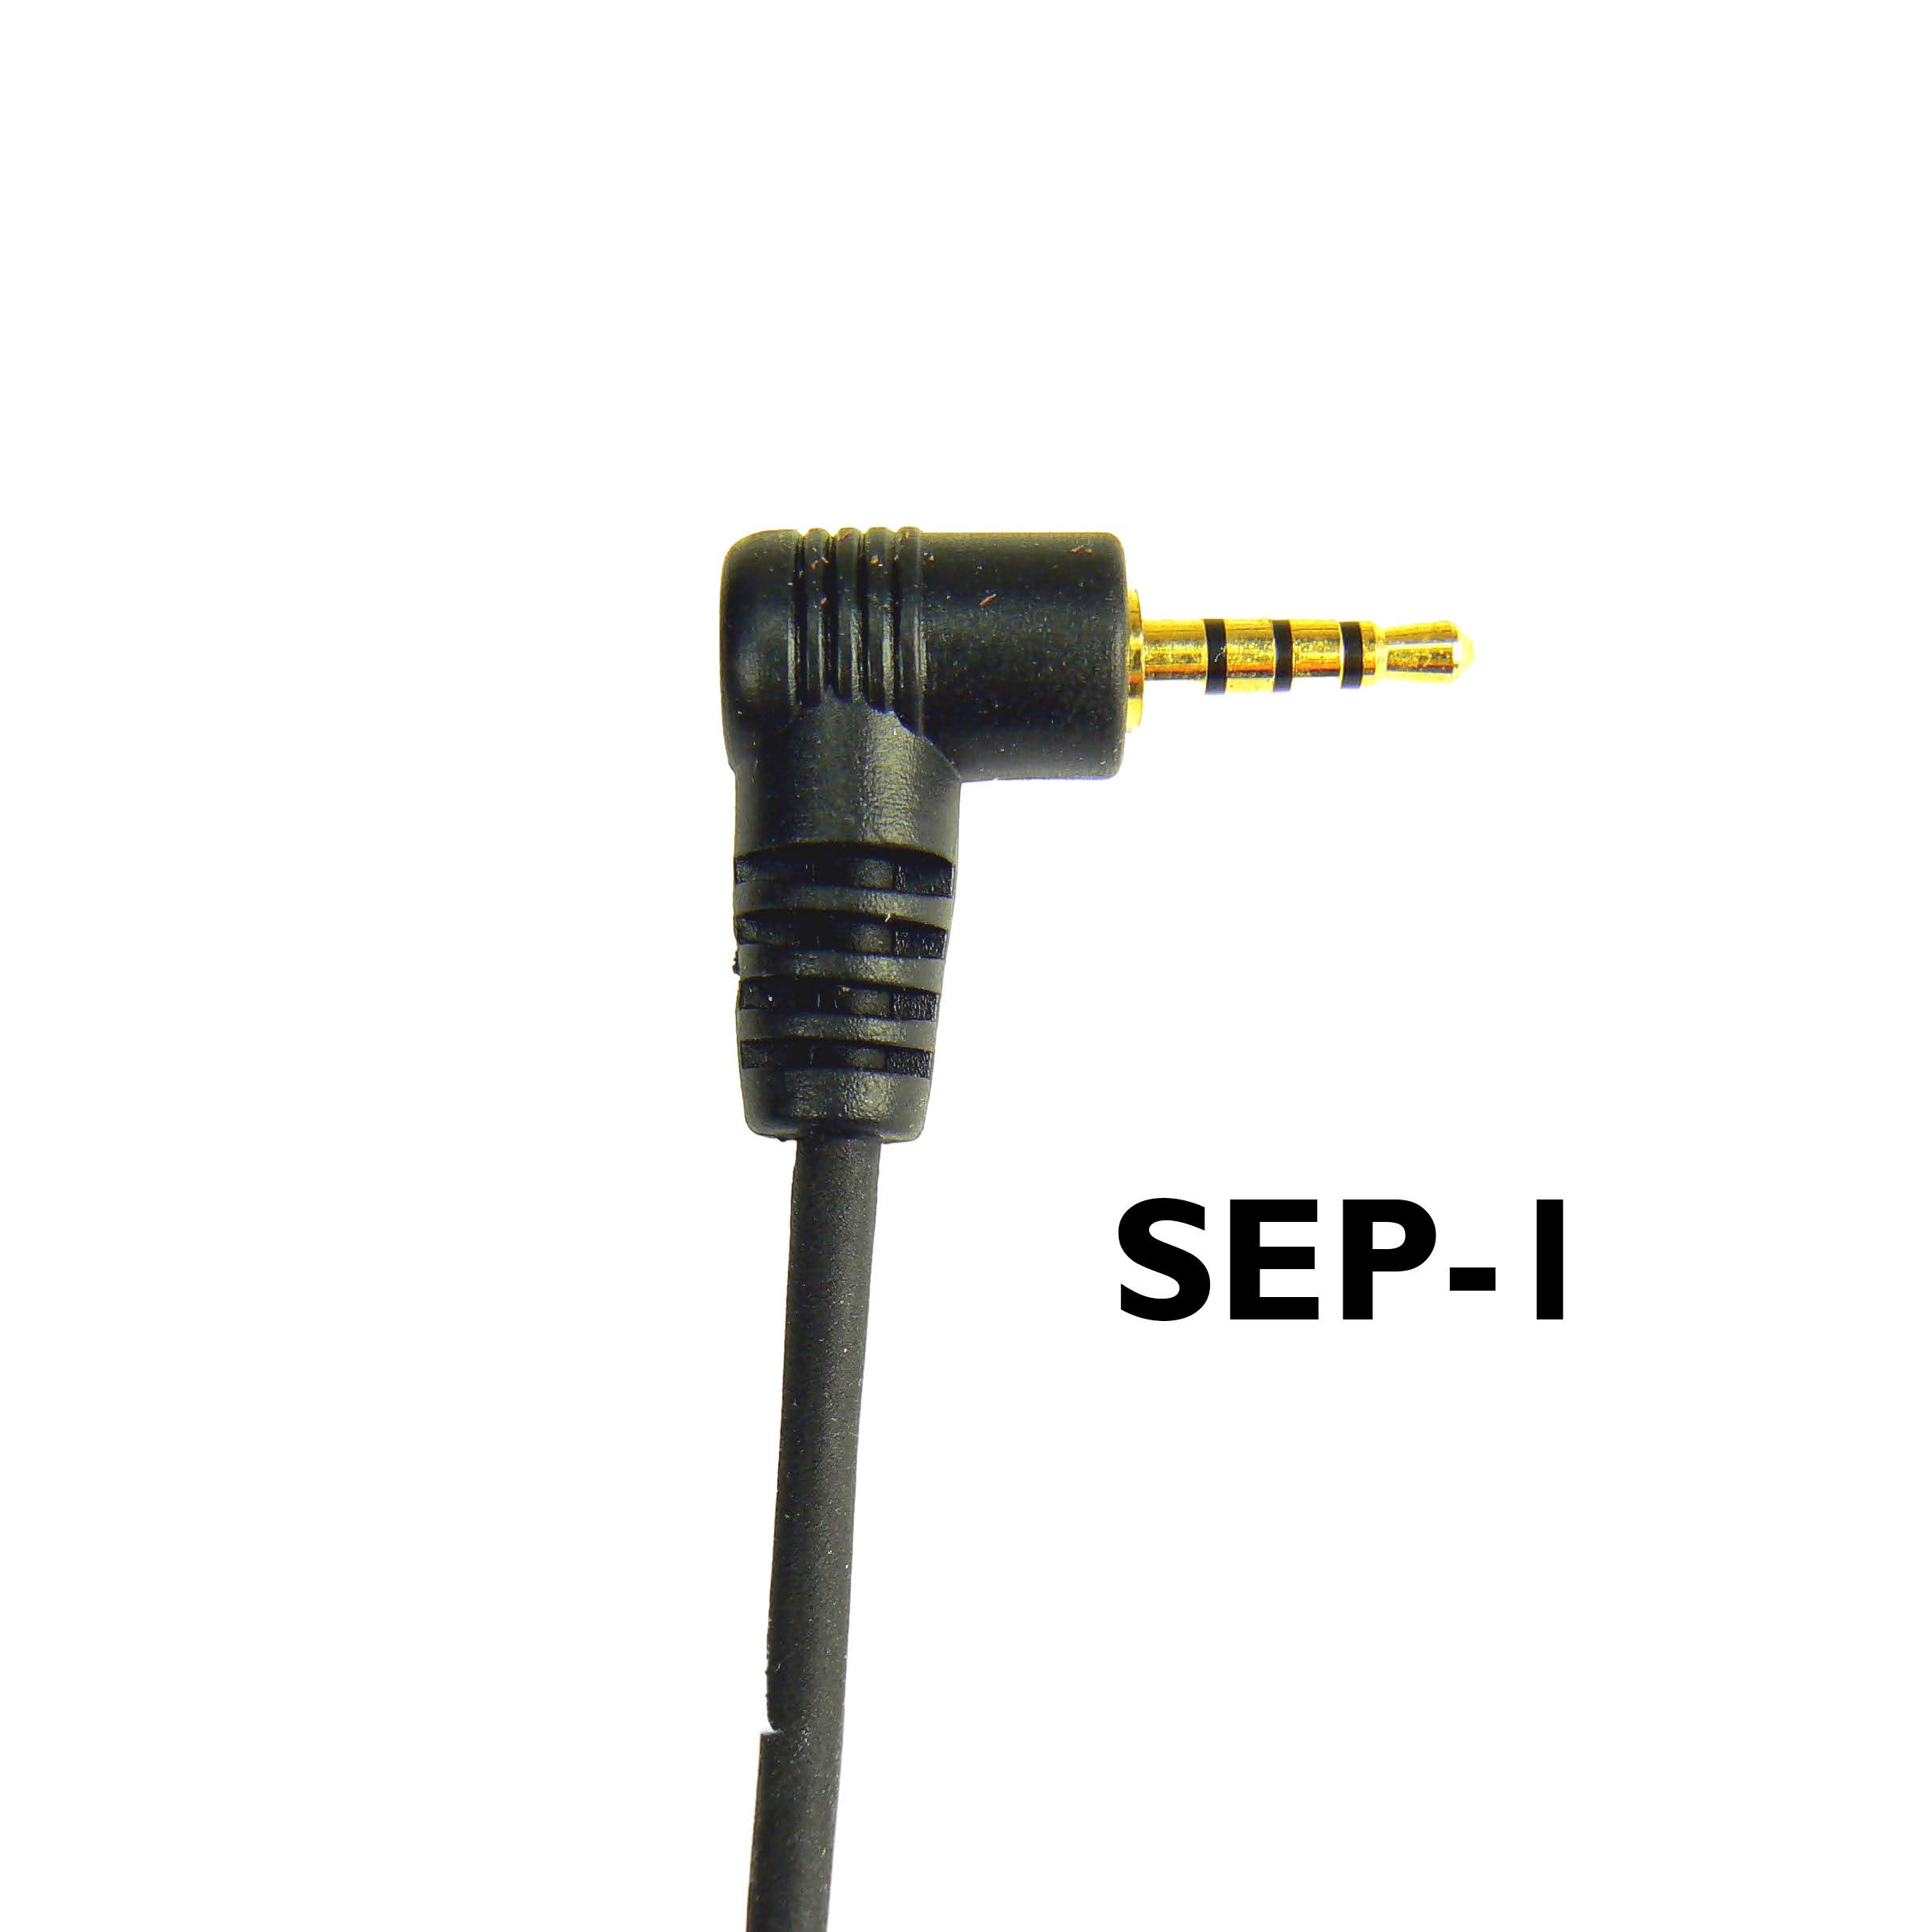 Sepura Tetra radio plug ending SEP1